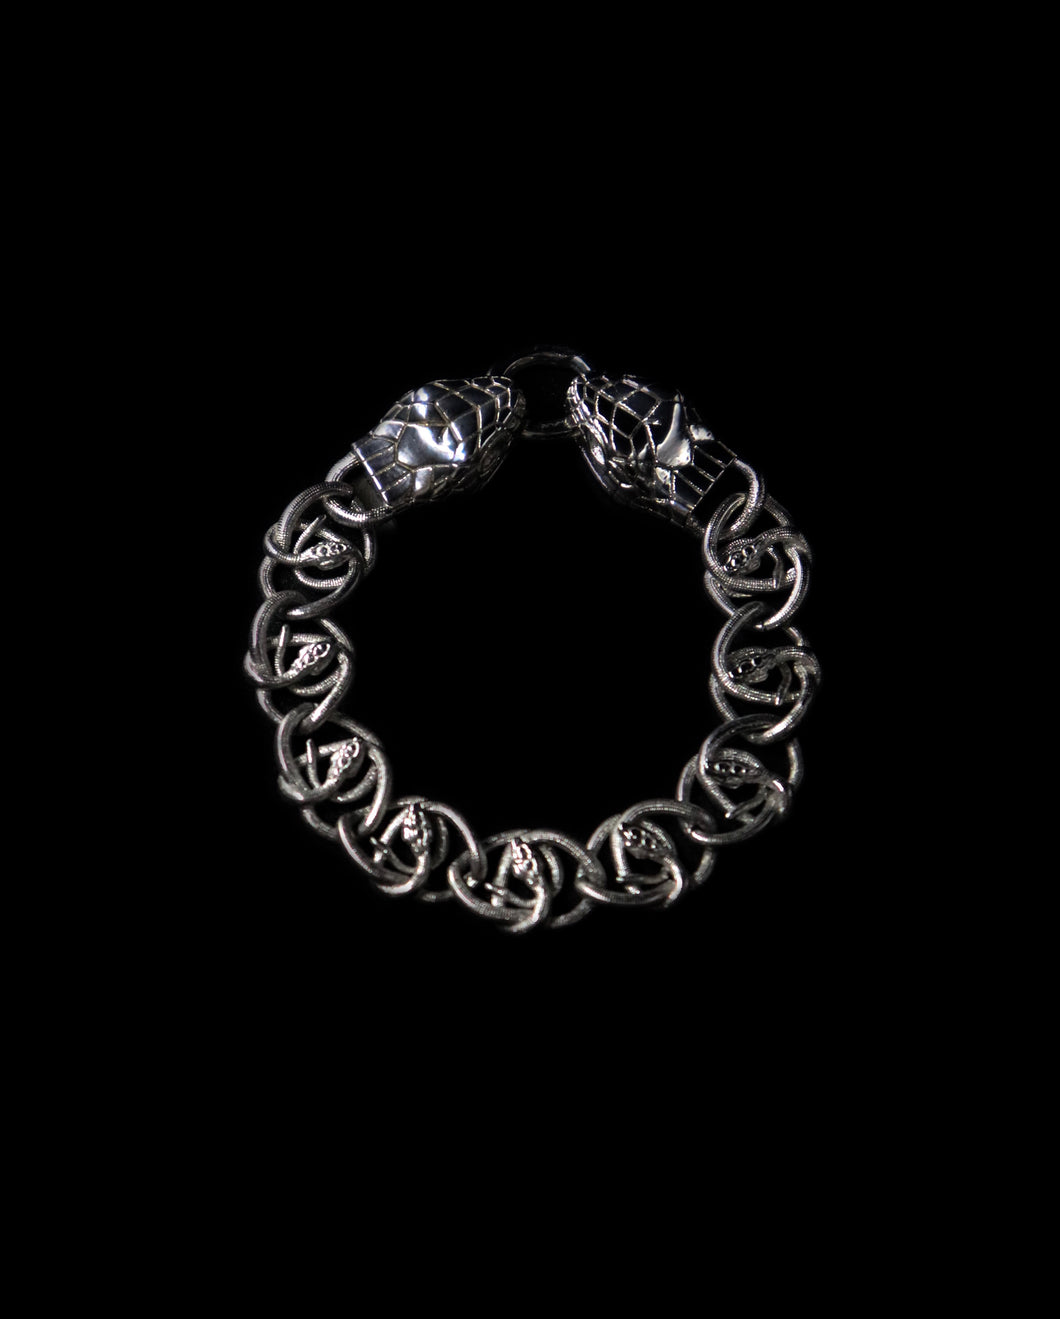 Silver Snake Head Bracelet - Fashion Jewelry by Yordy.